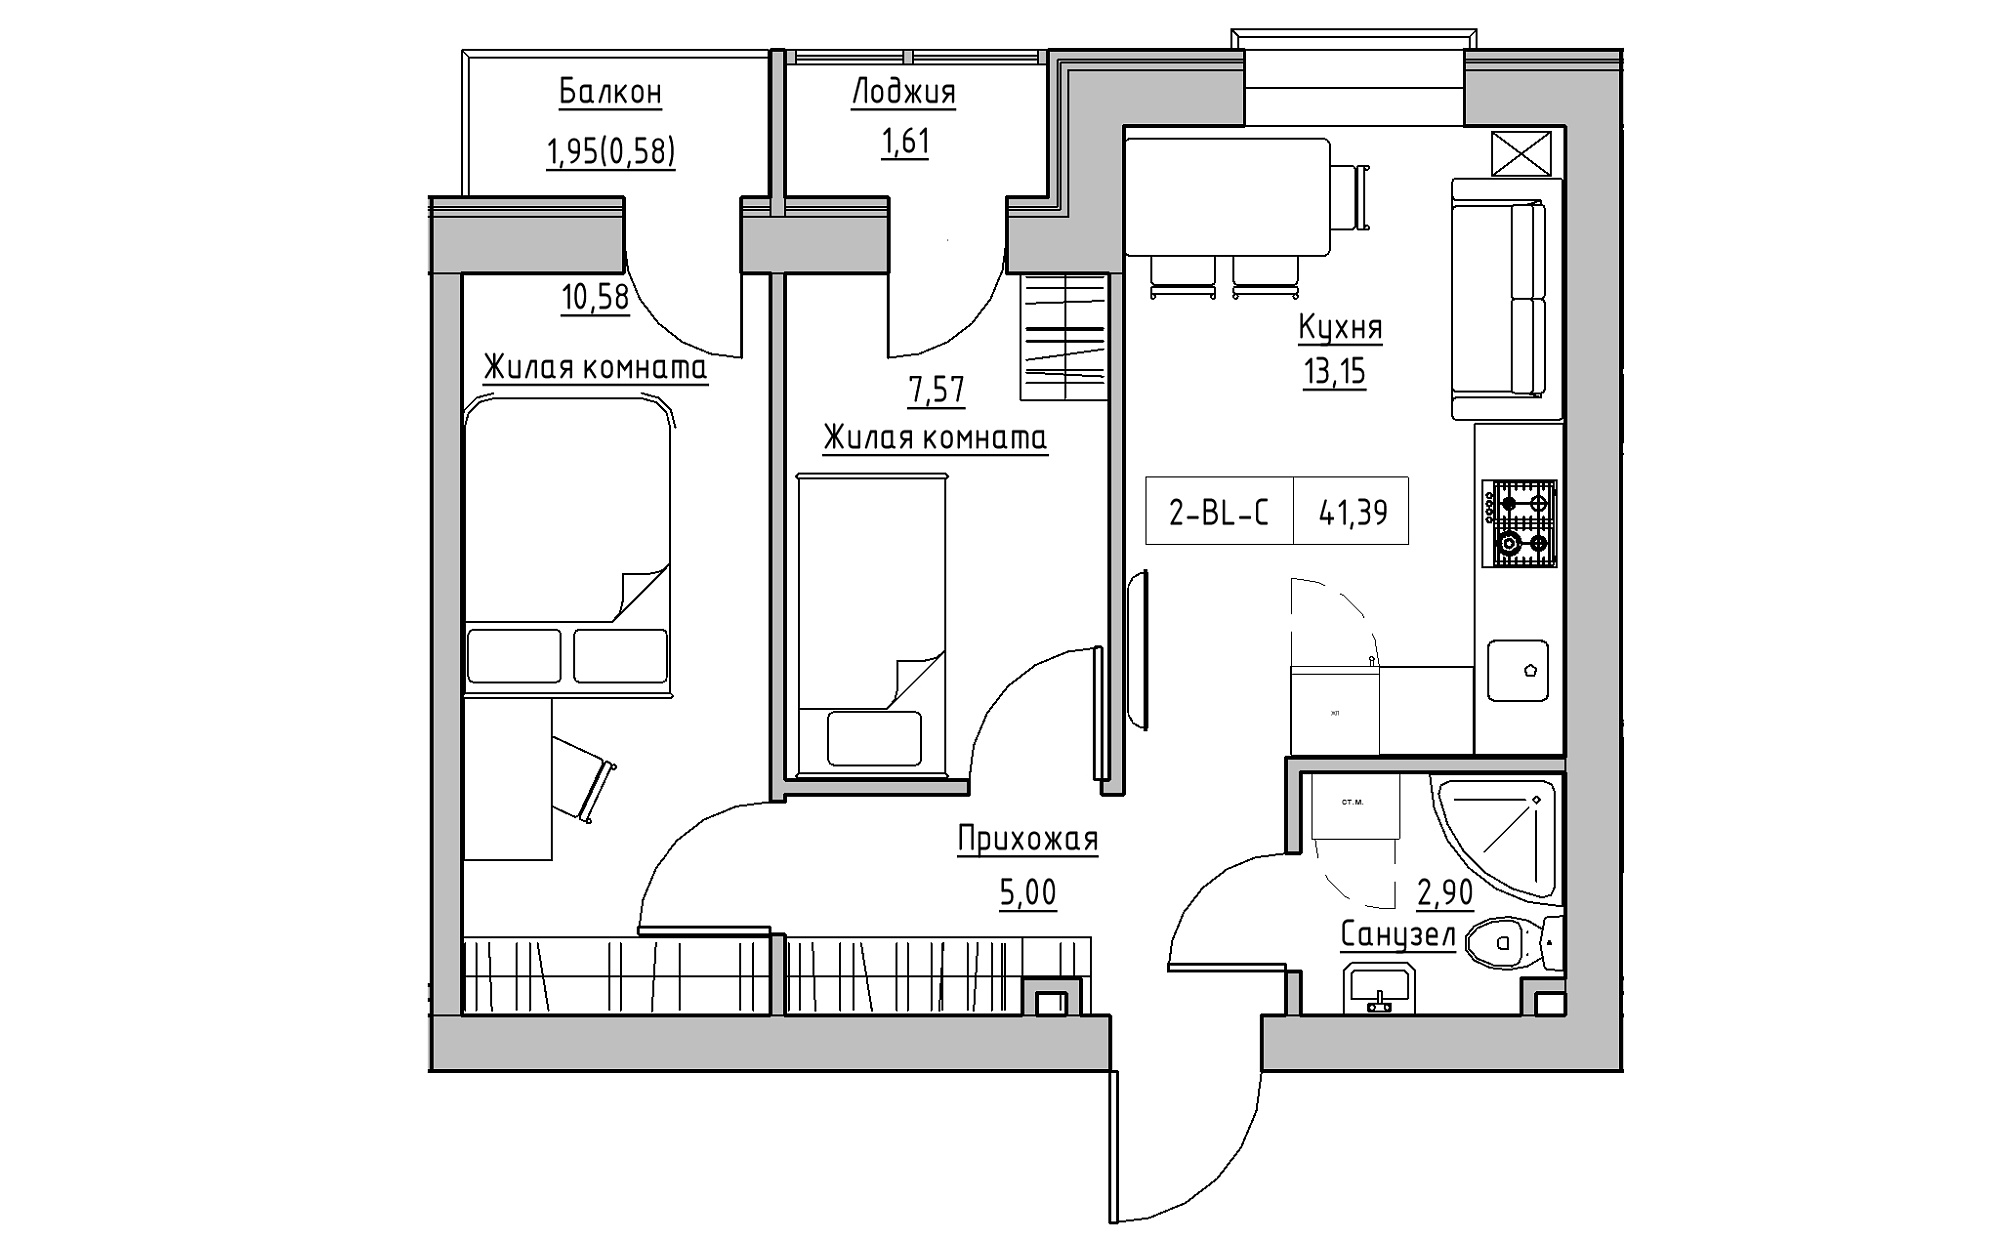 Planning 2-rm flats area 41.39m2, KS-022-03/0005.